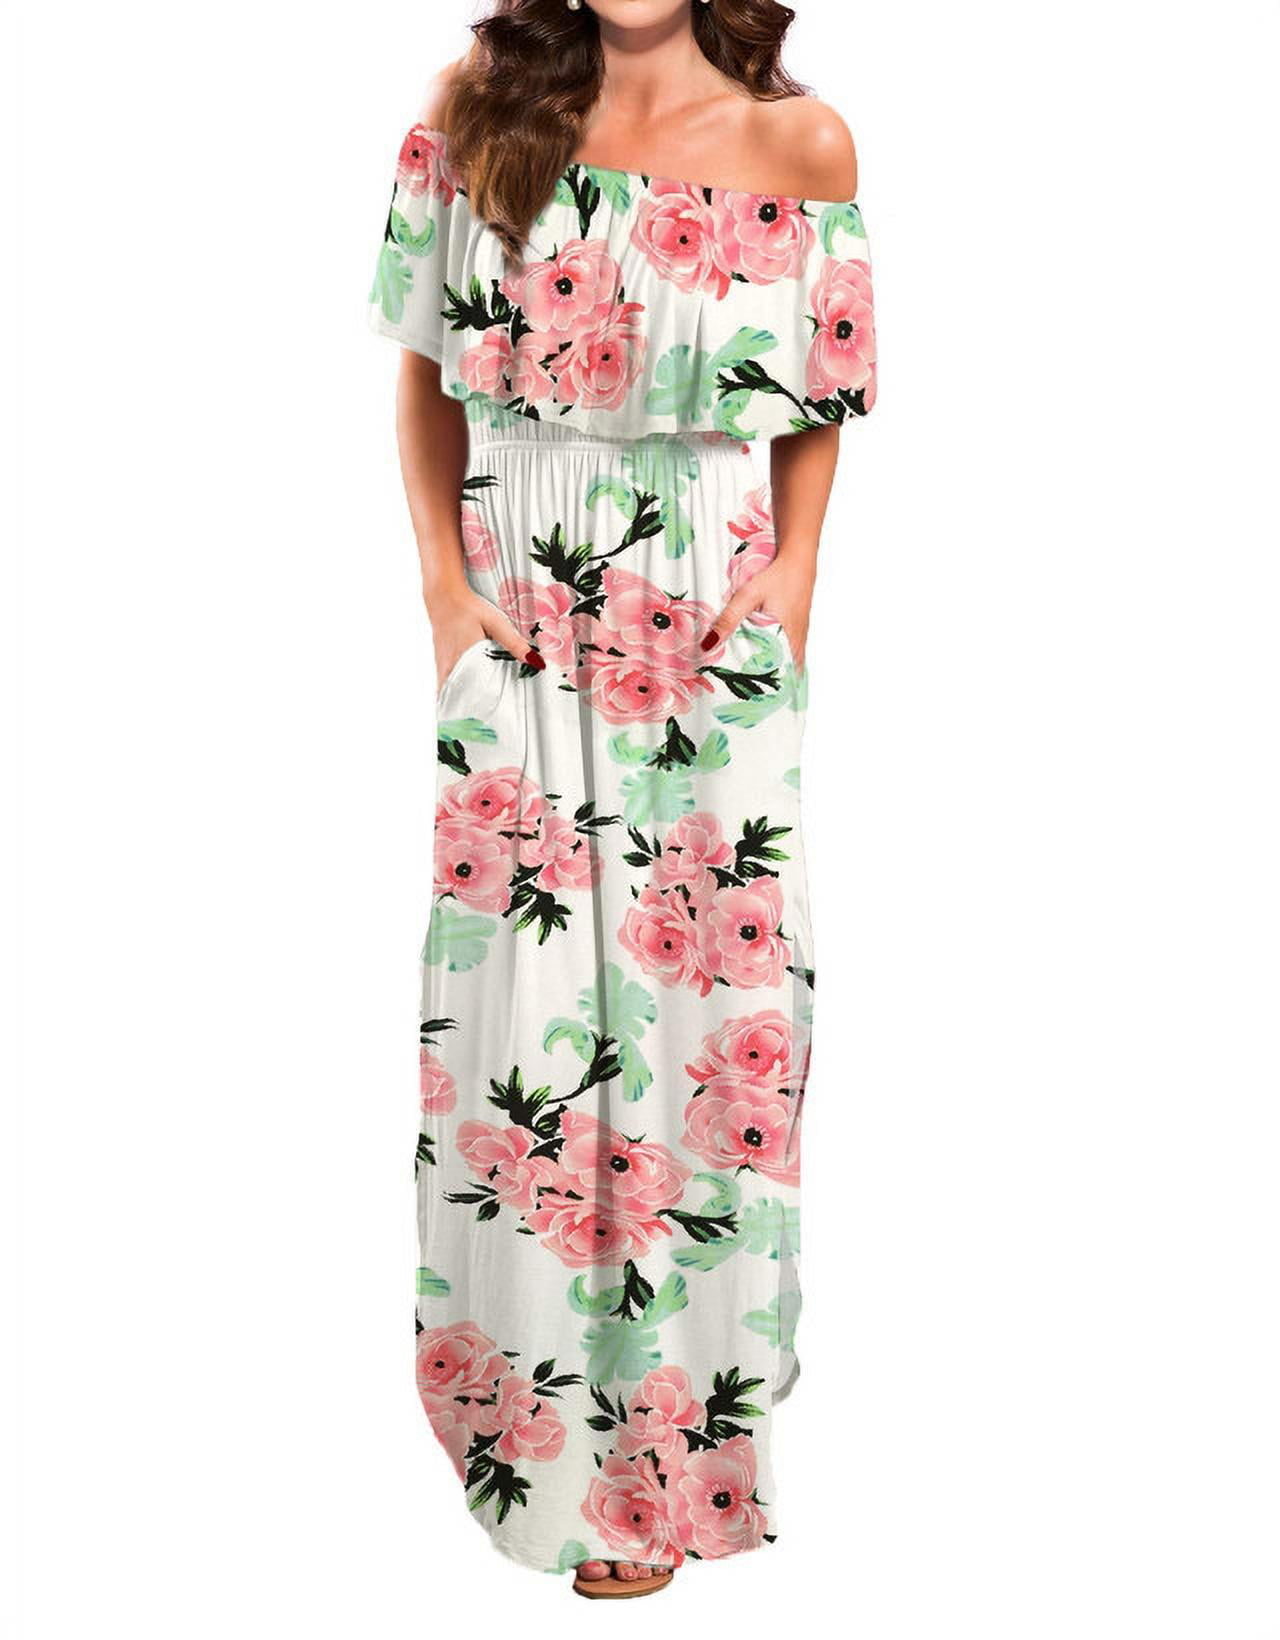 VERABENDI Women's Off Shoulder Summer Casual Long Ruffle Beach Maxi Dress with Pockets 